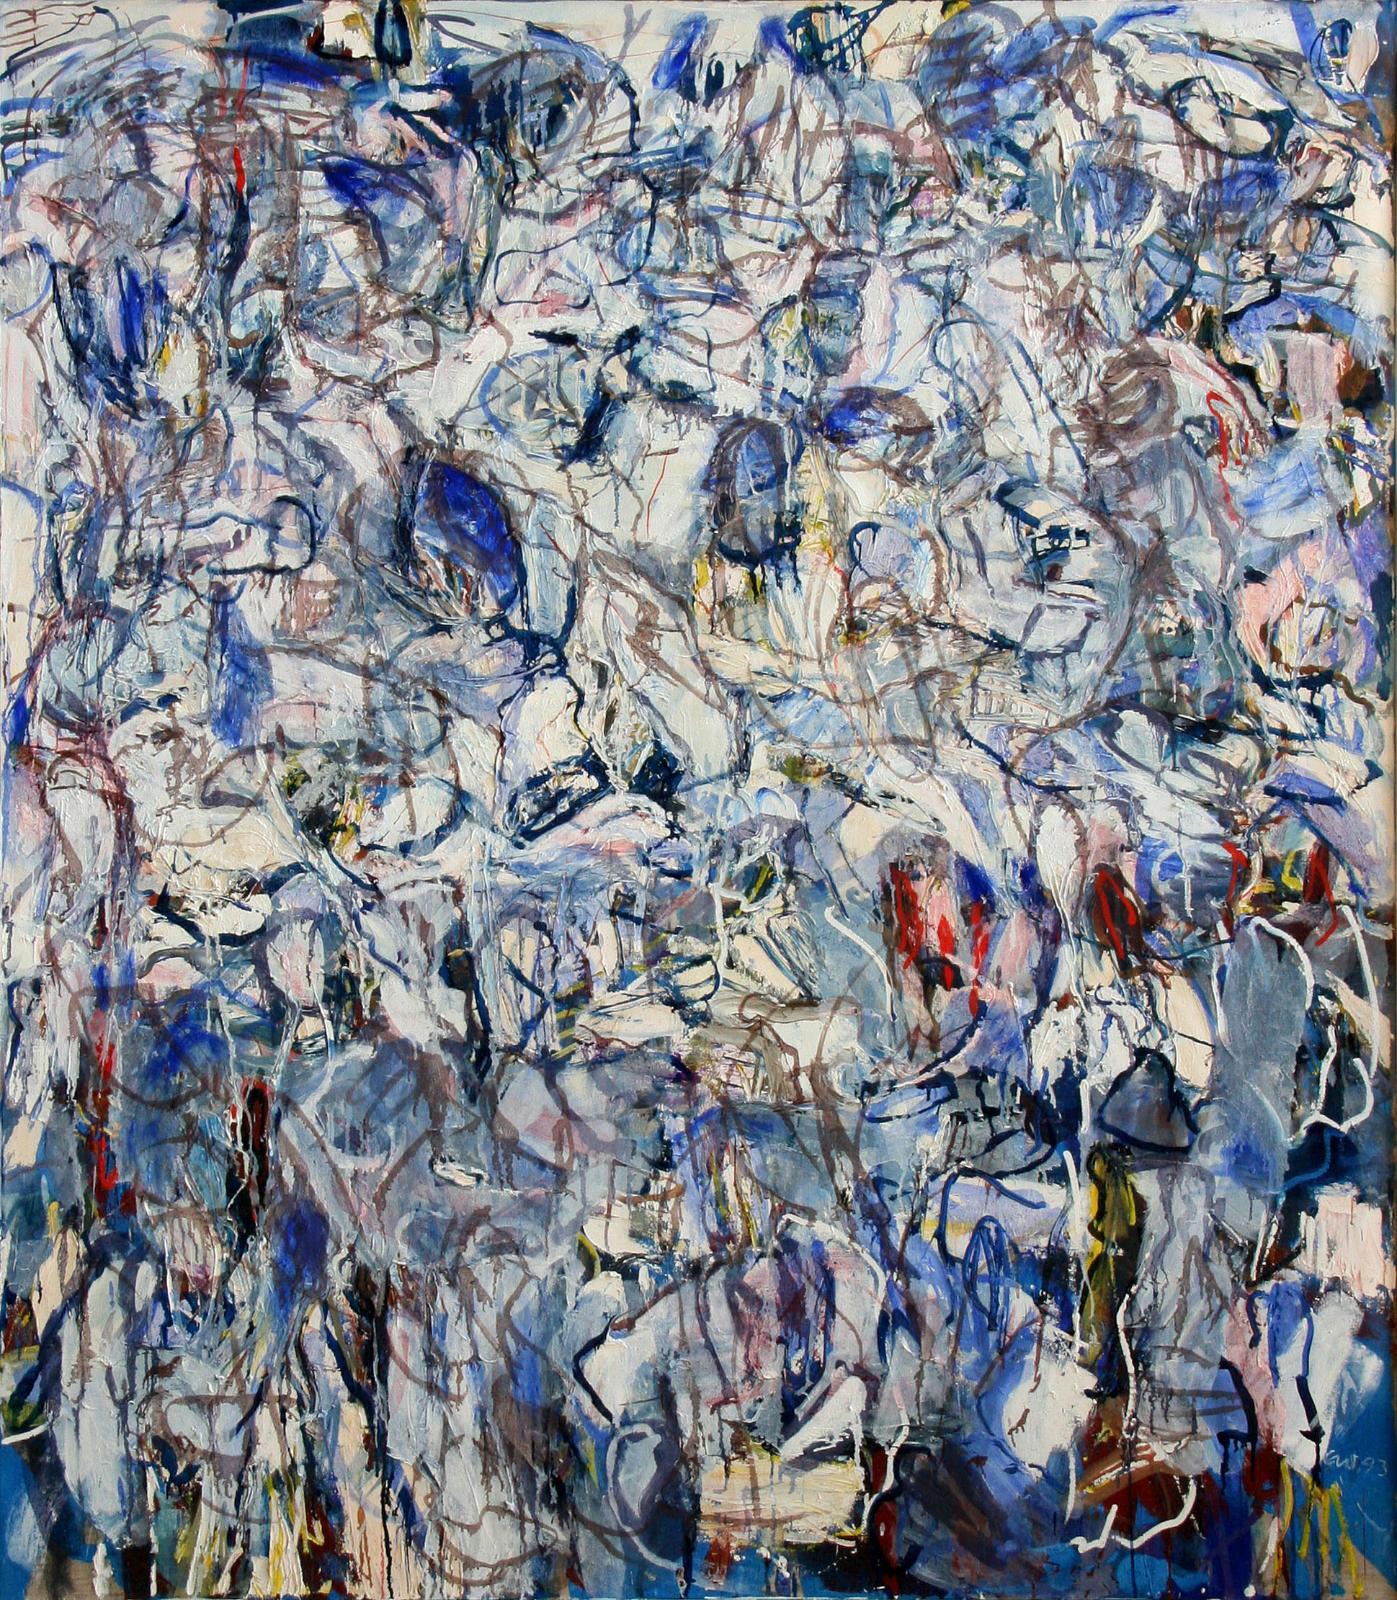 Elke Wree, Ferragosto, 1993, Öl auf Leinwand, 150 cm x 130 cm, Preis auf Anfrage, Galerie Cyprian Brenner